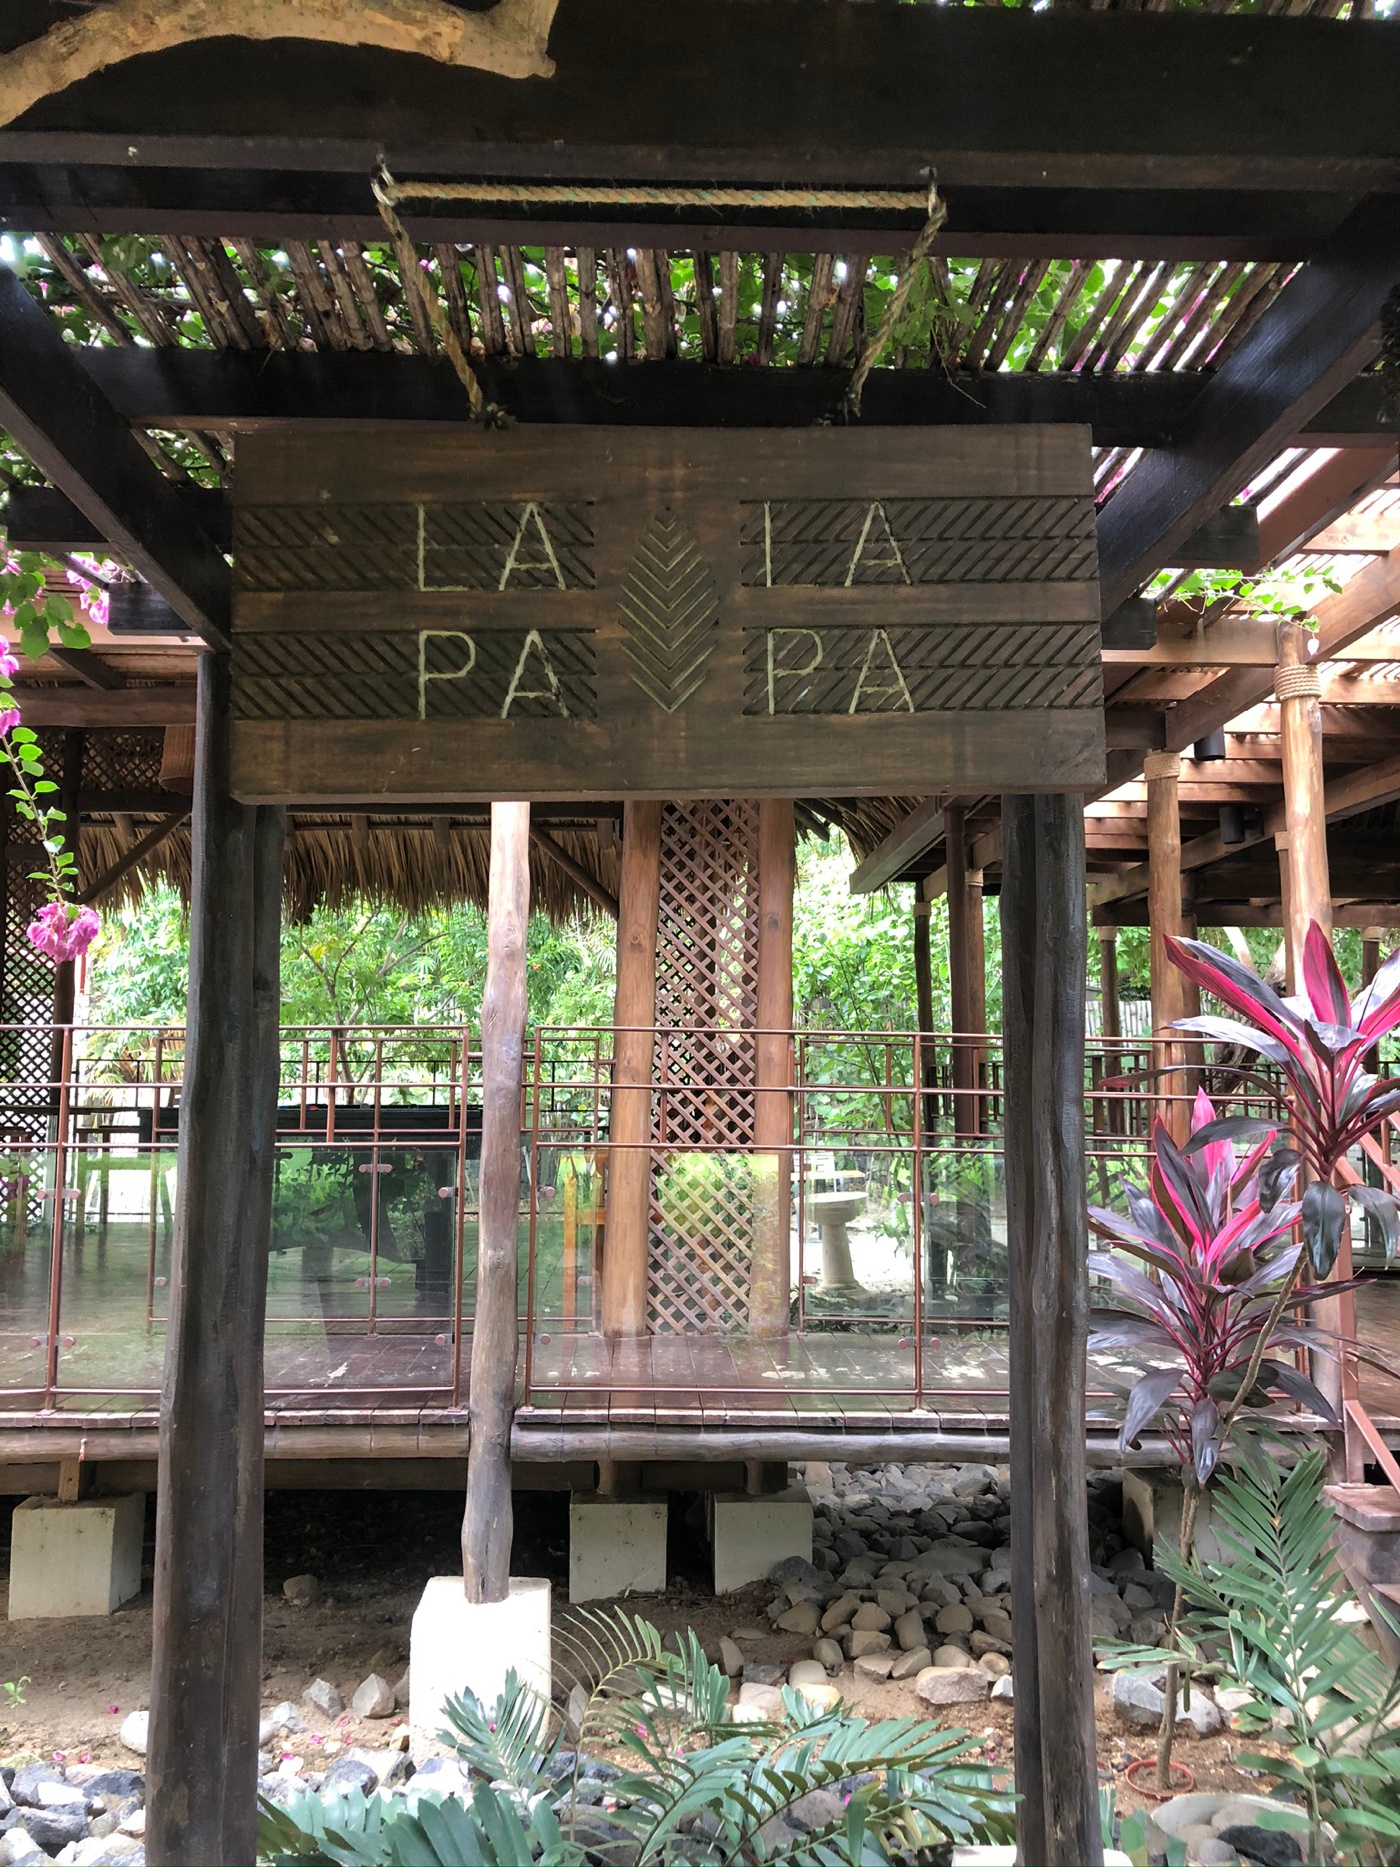 Entrance to the Lapa Lapa Beach Club at Dreams Las Mareas